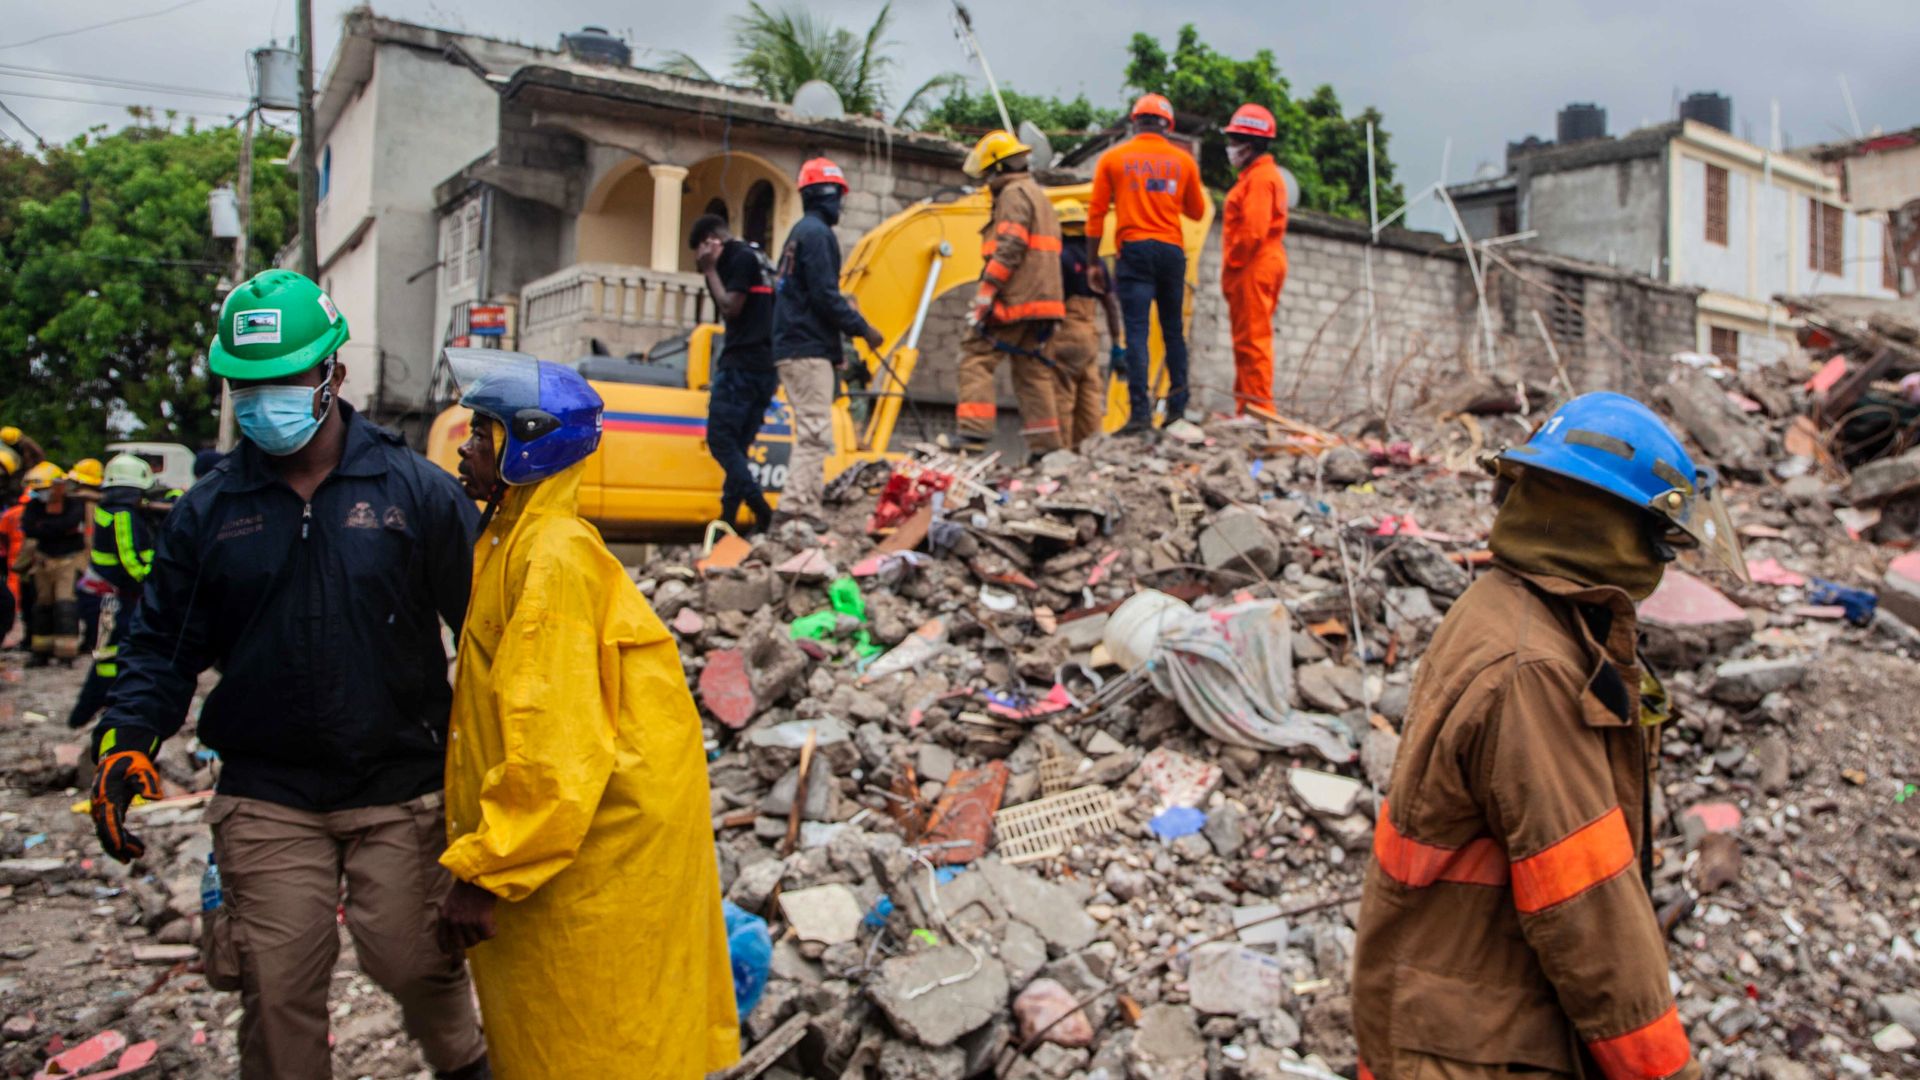 Firefighters remove debris in search of survivors after a 7.2-magnitude earthquake struck Haiti